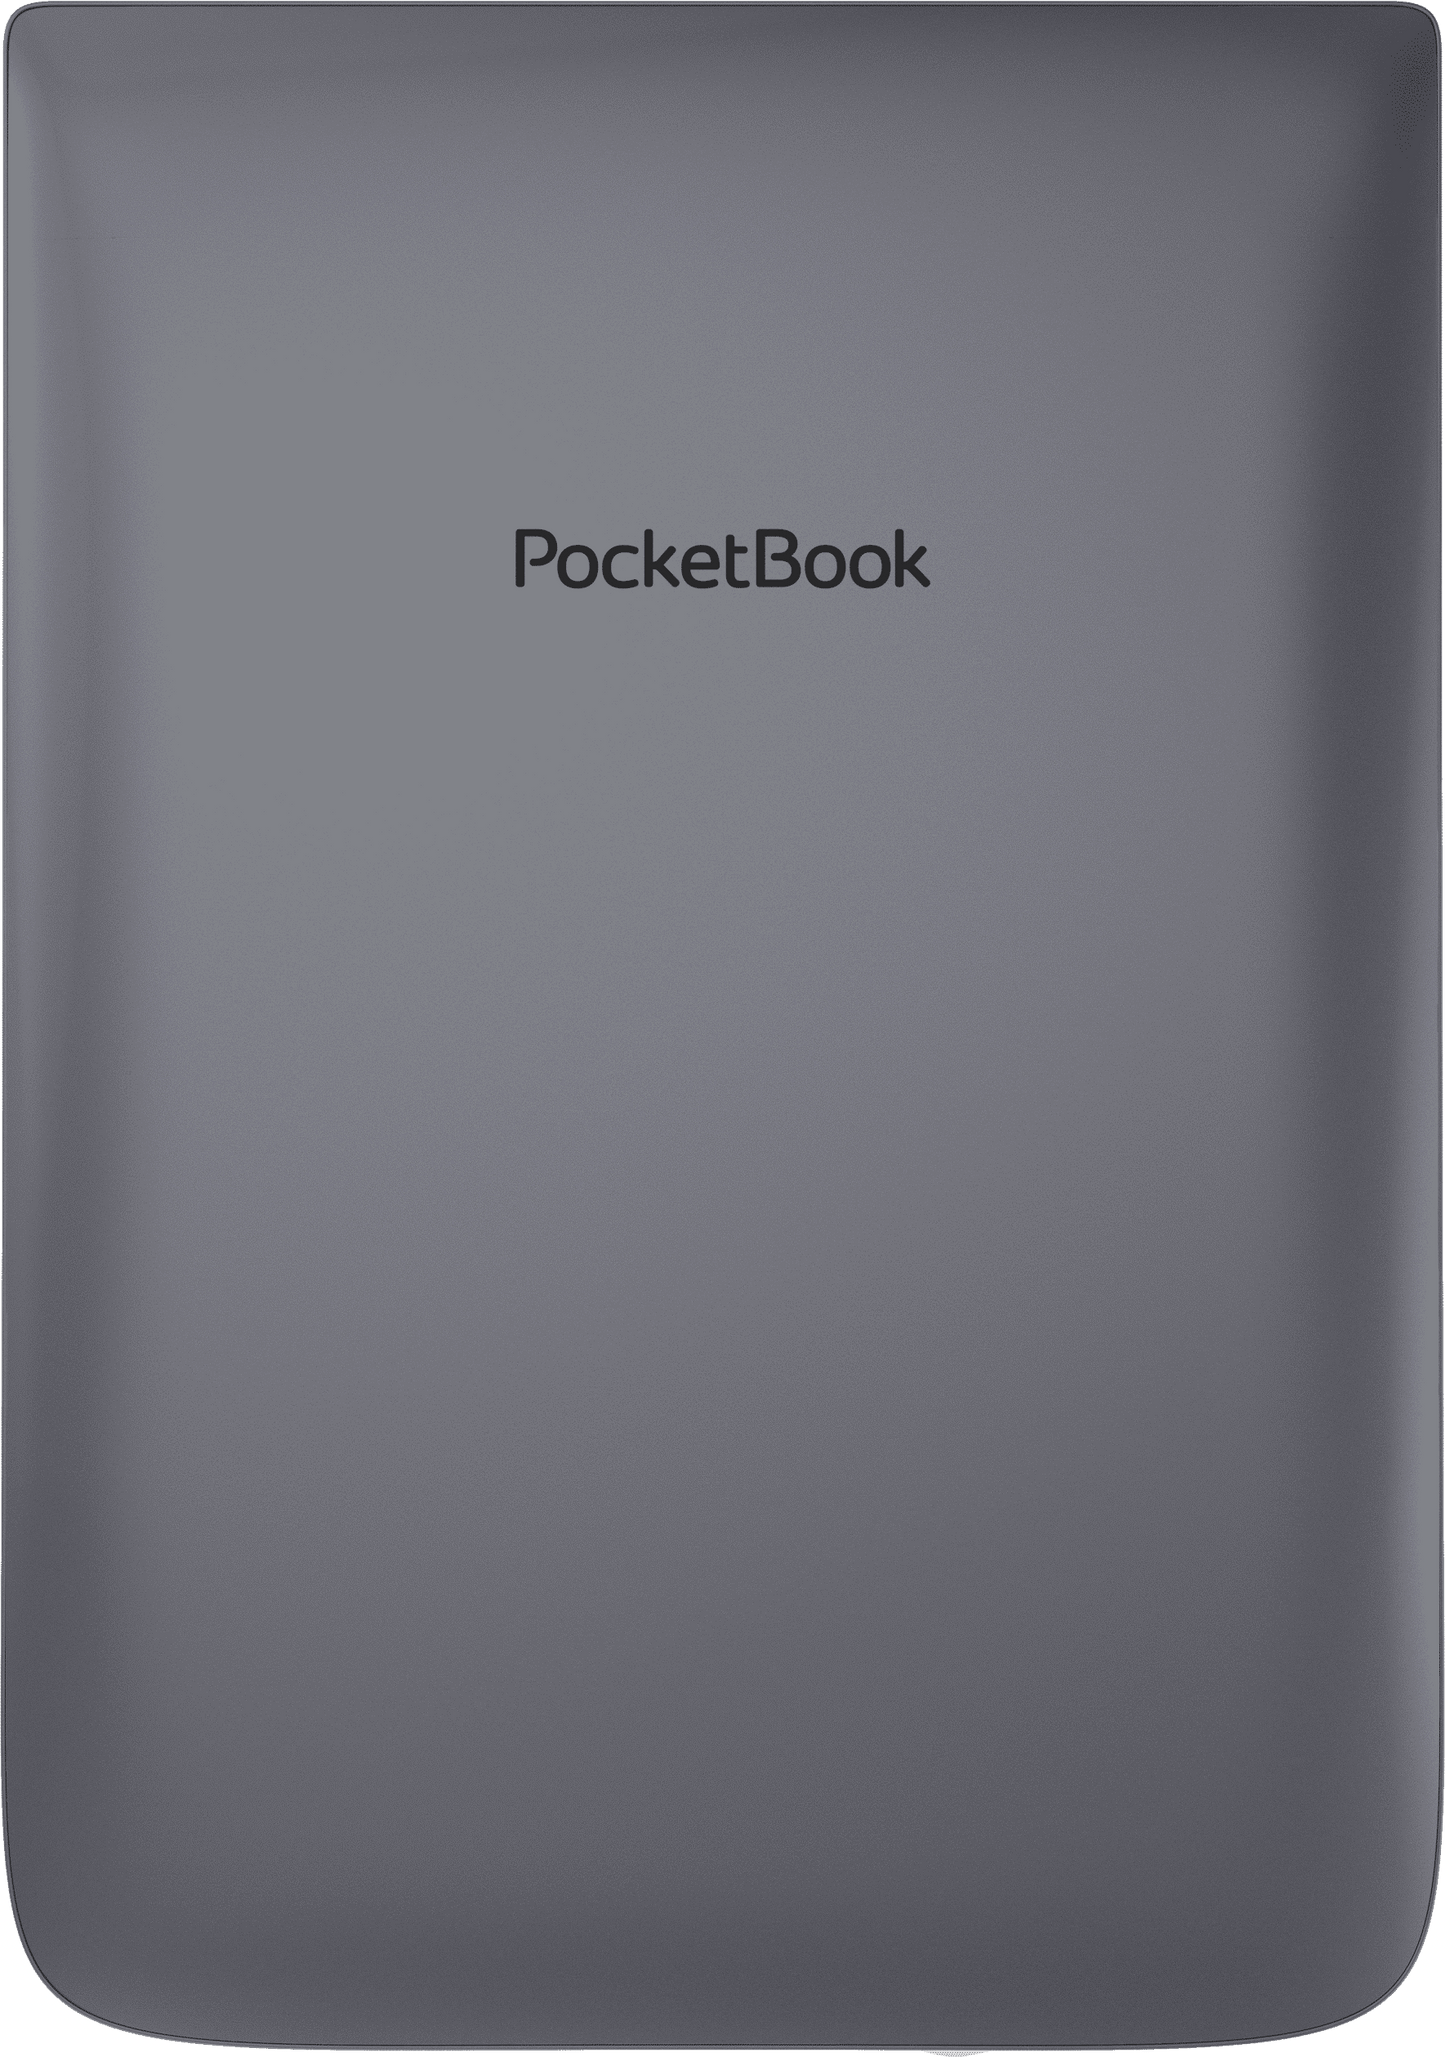 Pocketbook Inkpad 3 PRO